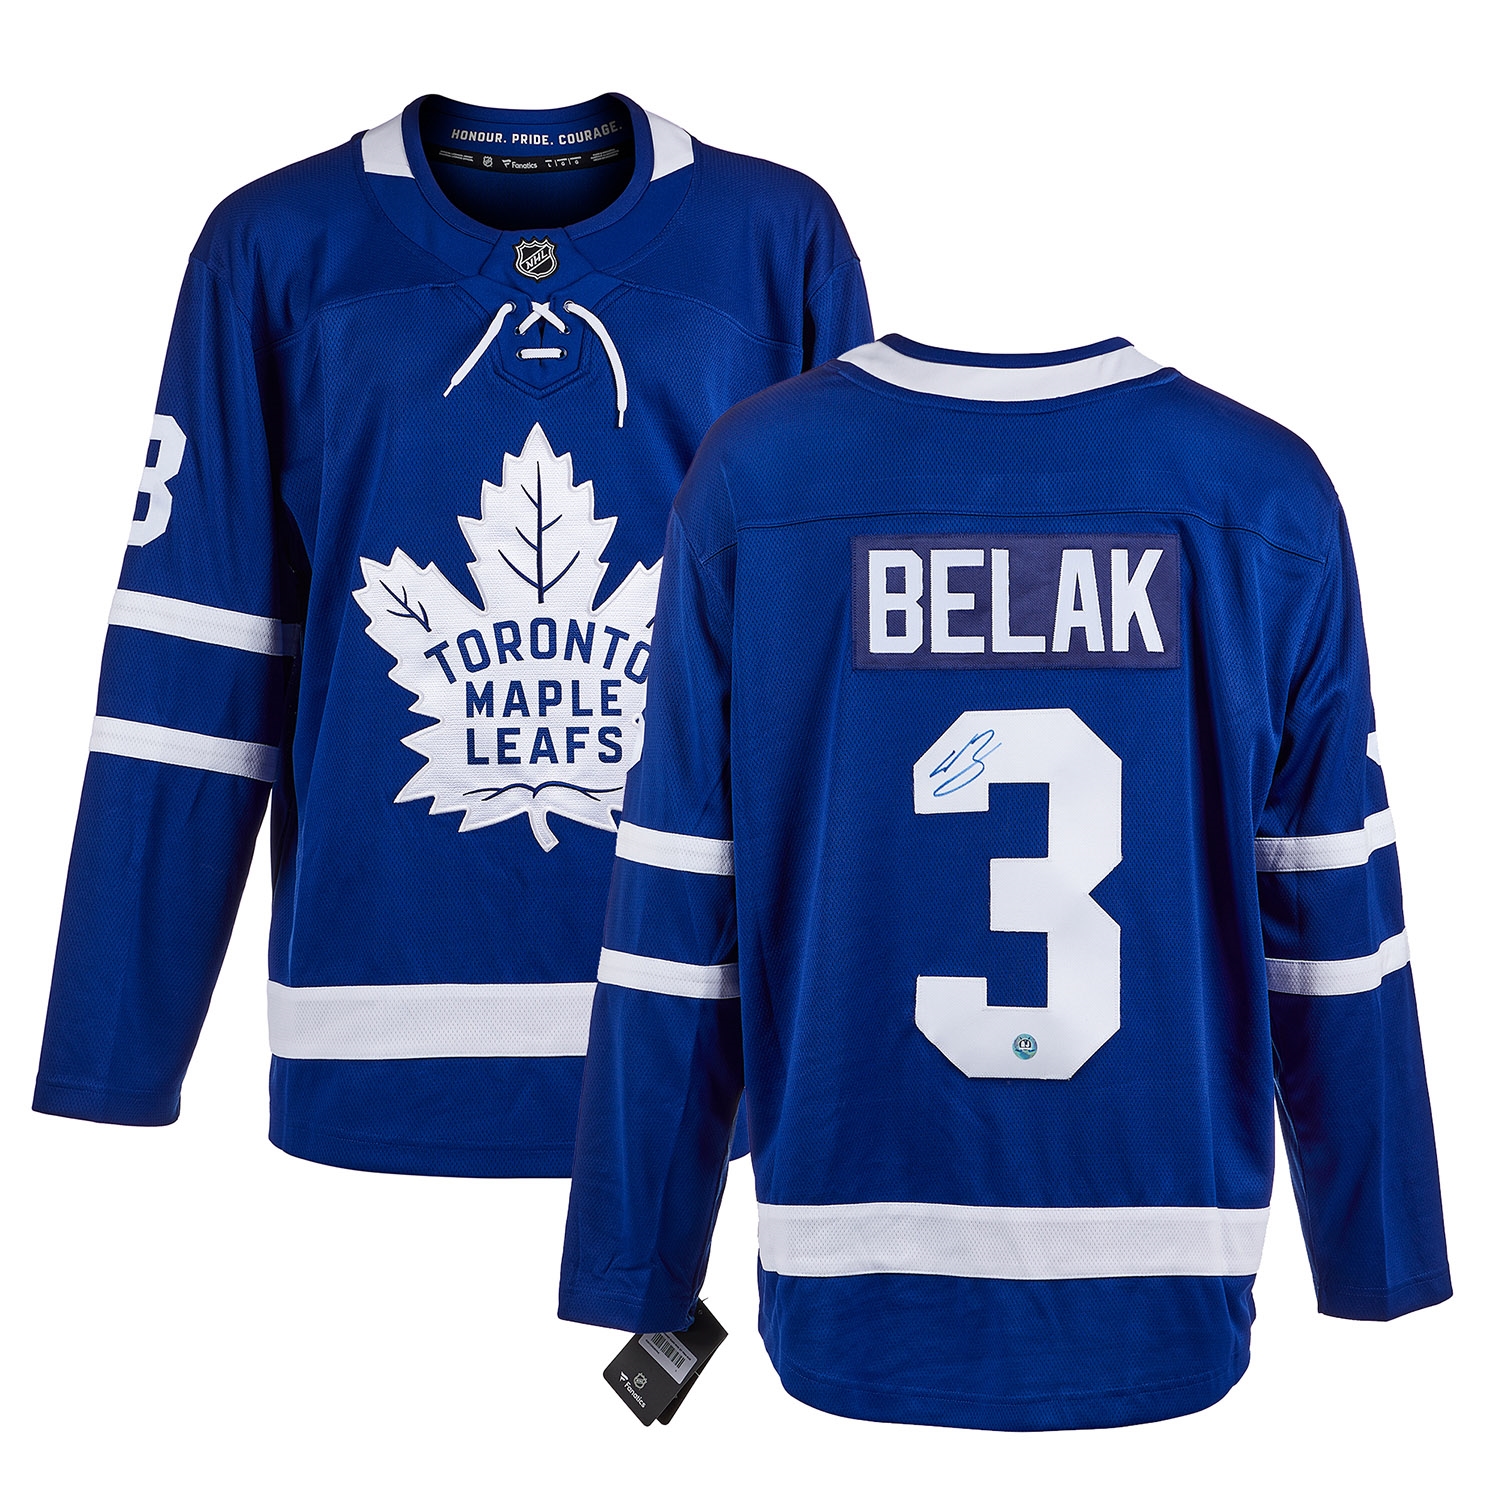 Wade Belak Toronto Maple Leafs Autographed Fanatics Jersey